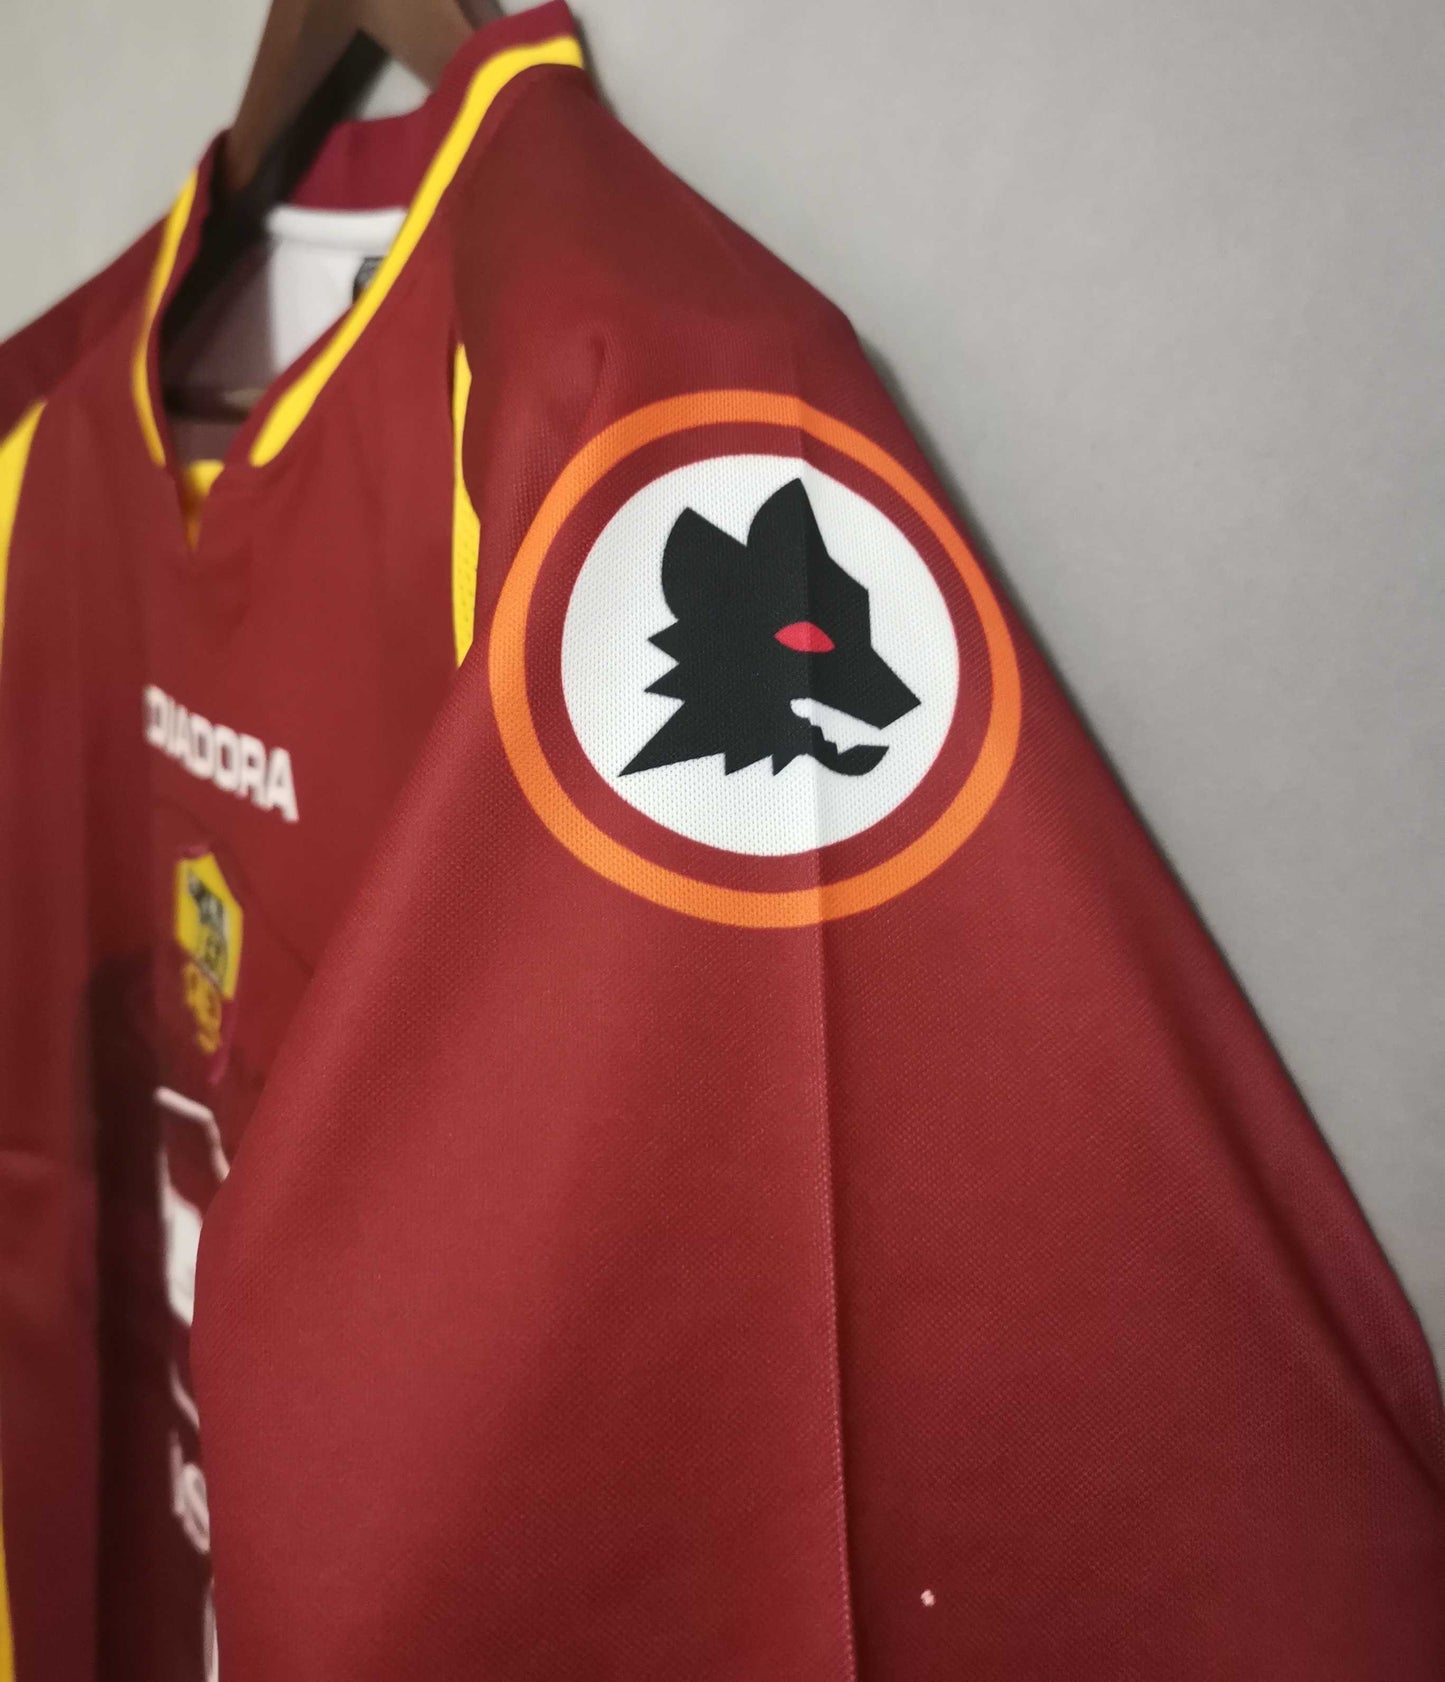 AS Roma 97-98 Home Shirt